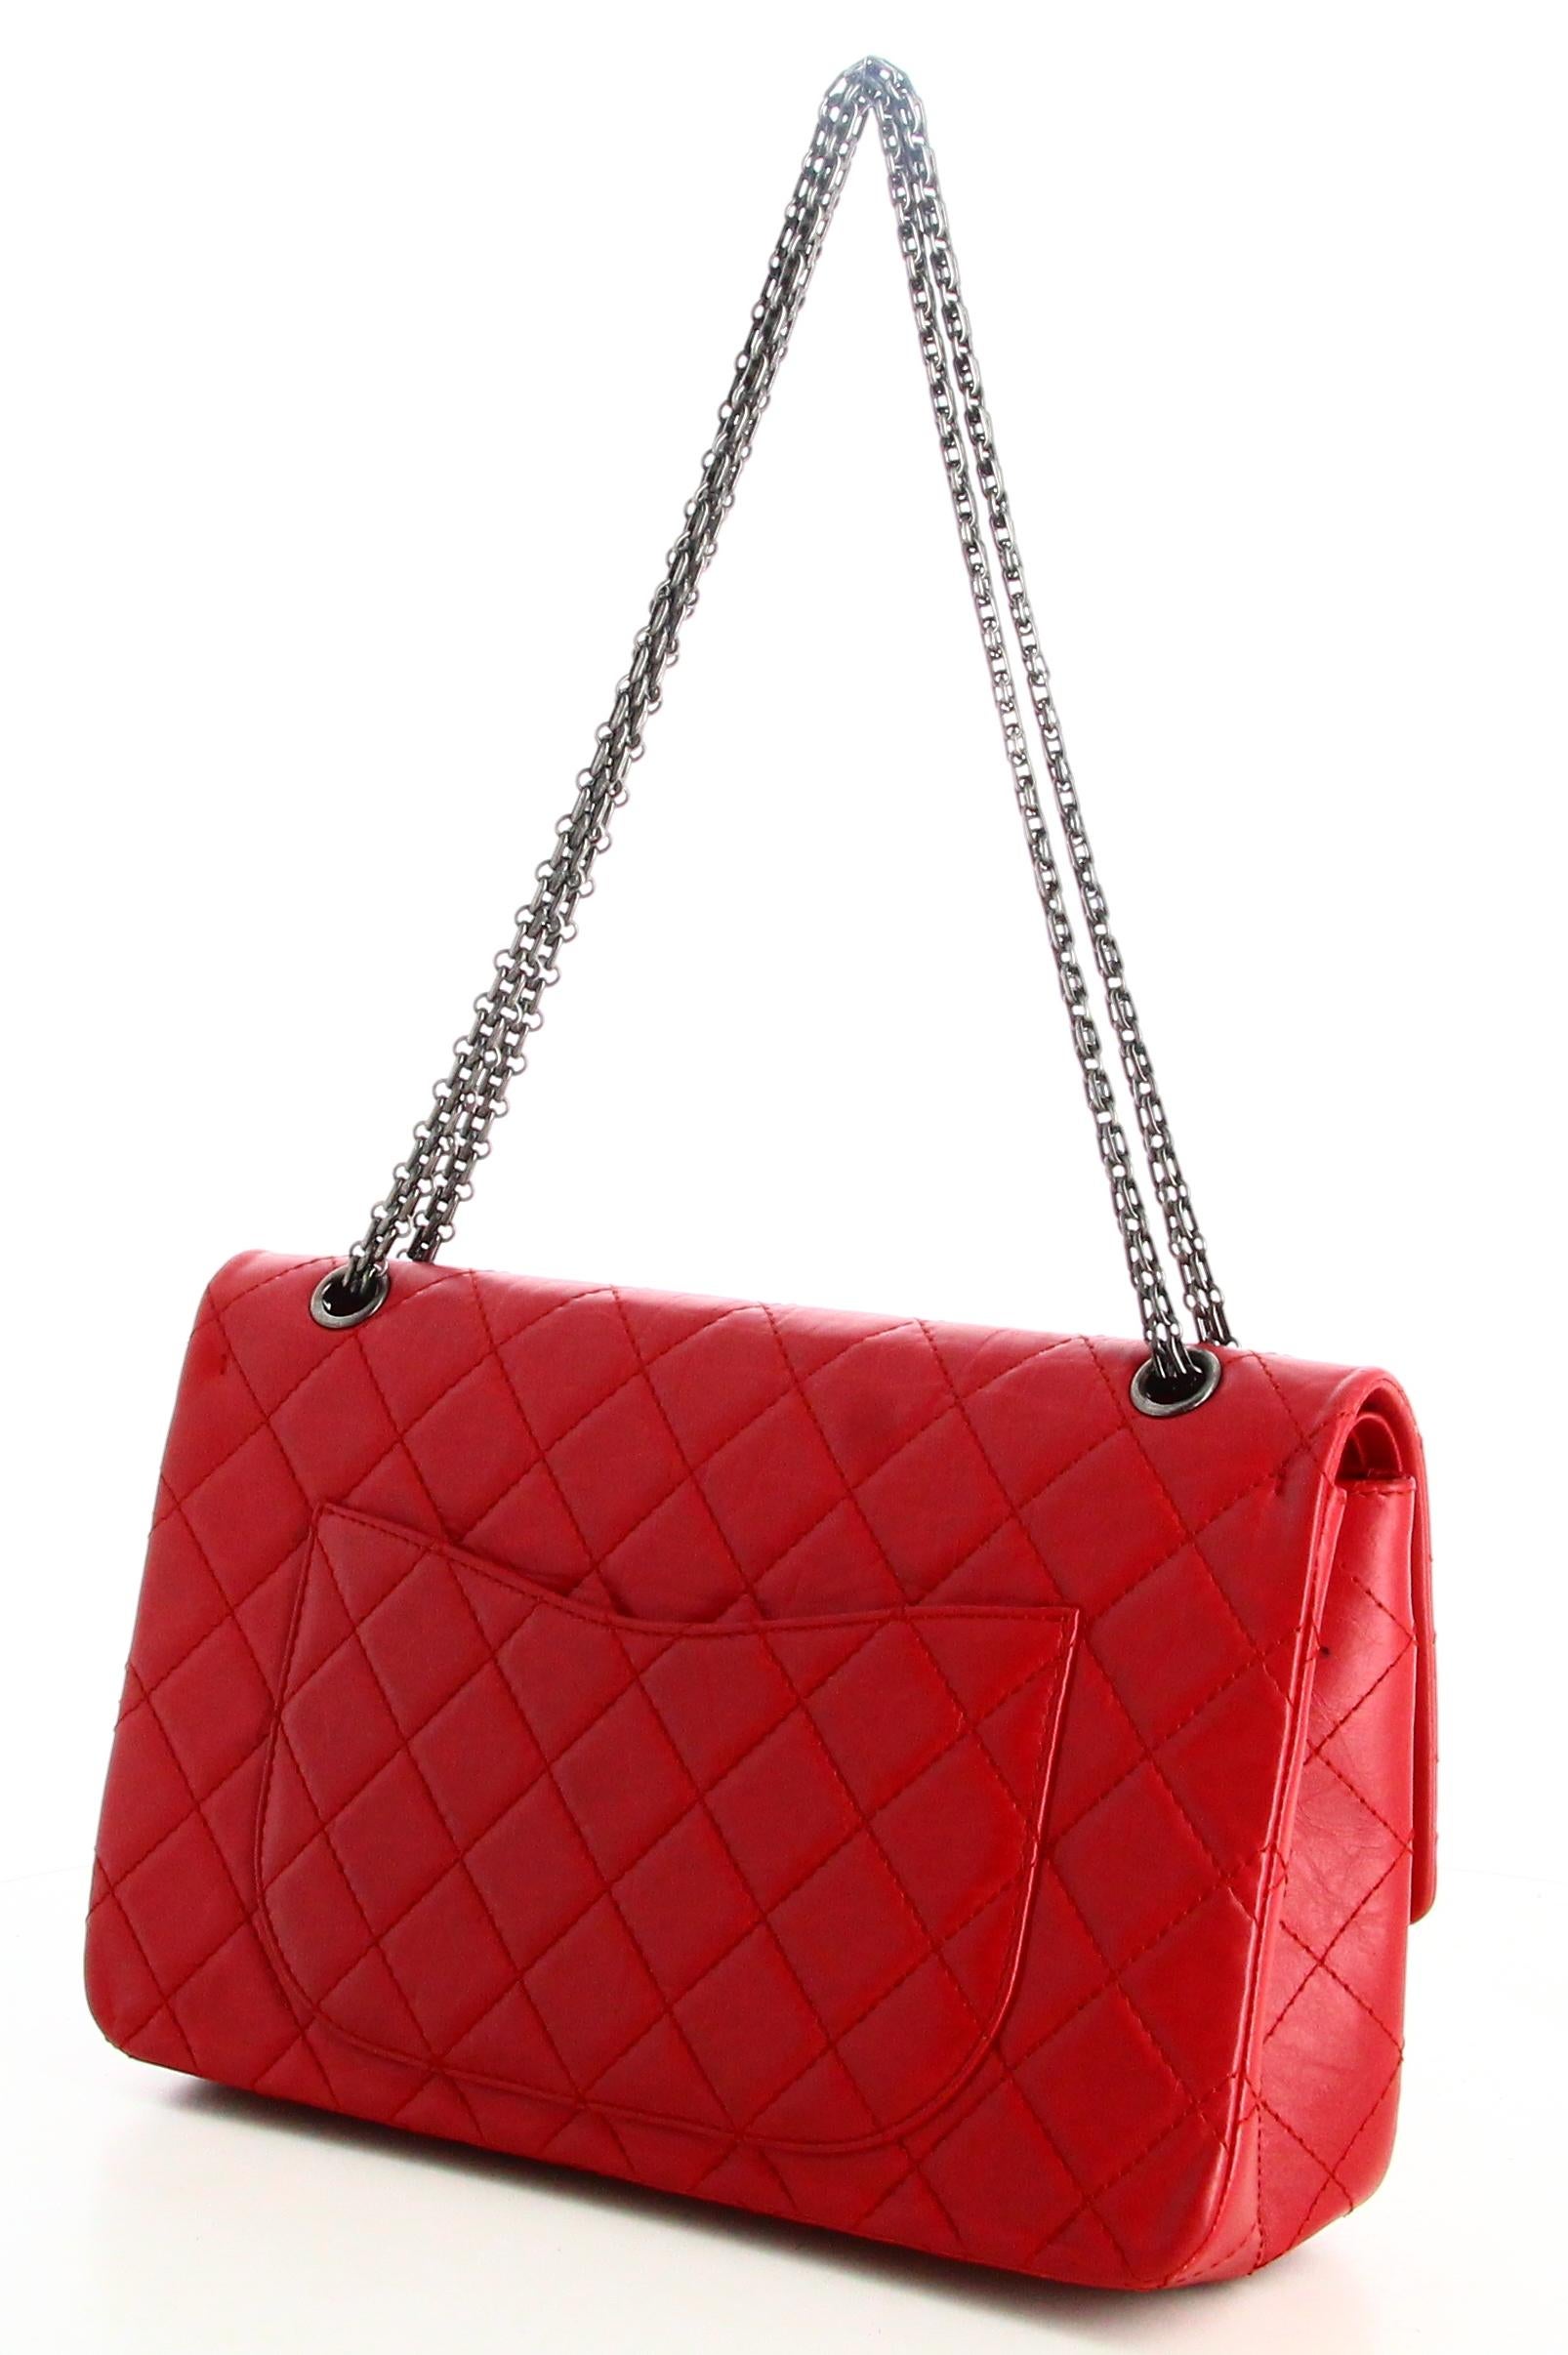 2011 Chanel Reissue Handbag 2.55 Calfskin Double Flap For Sale 1